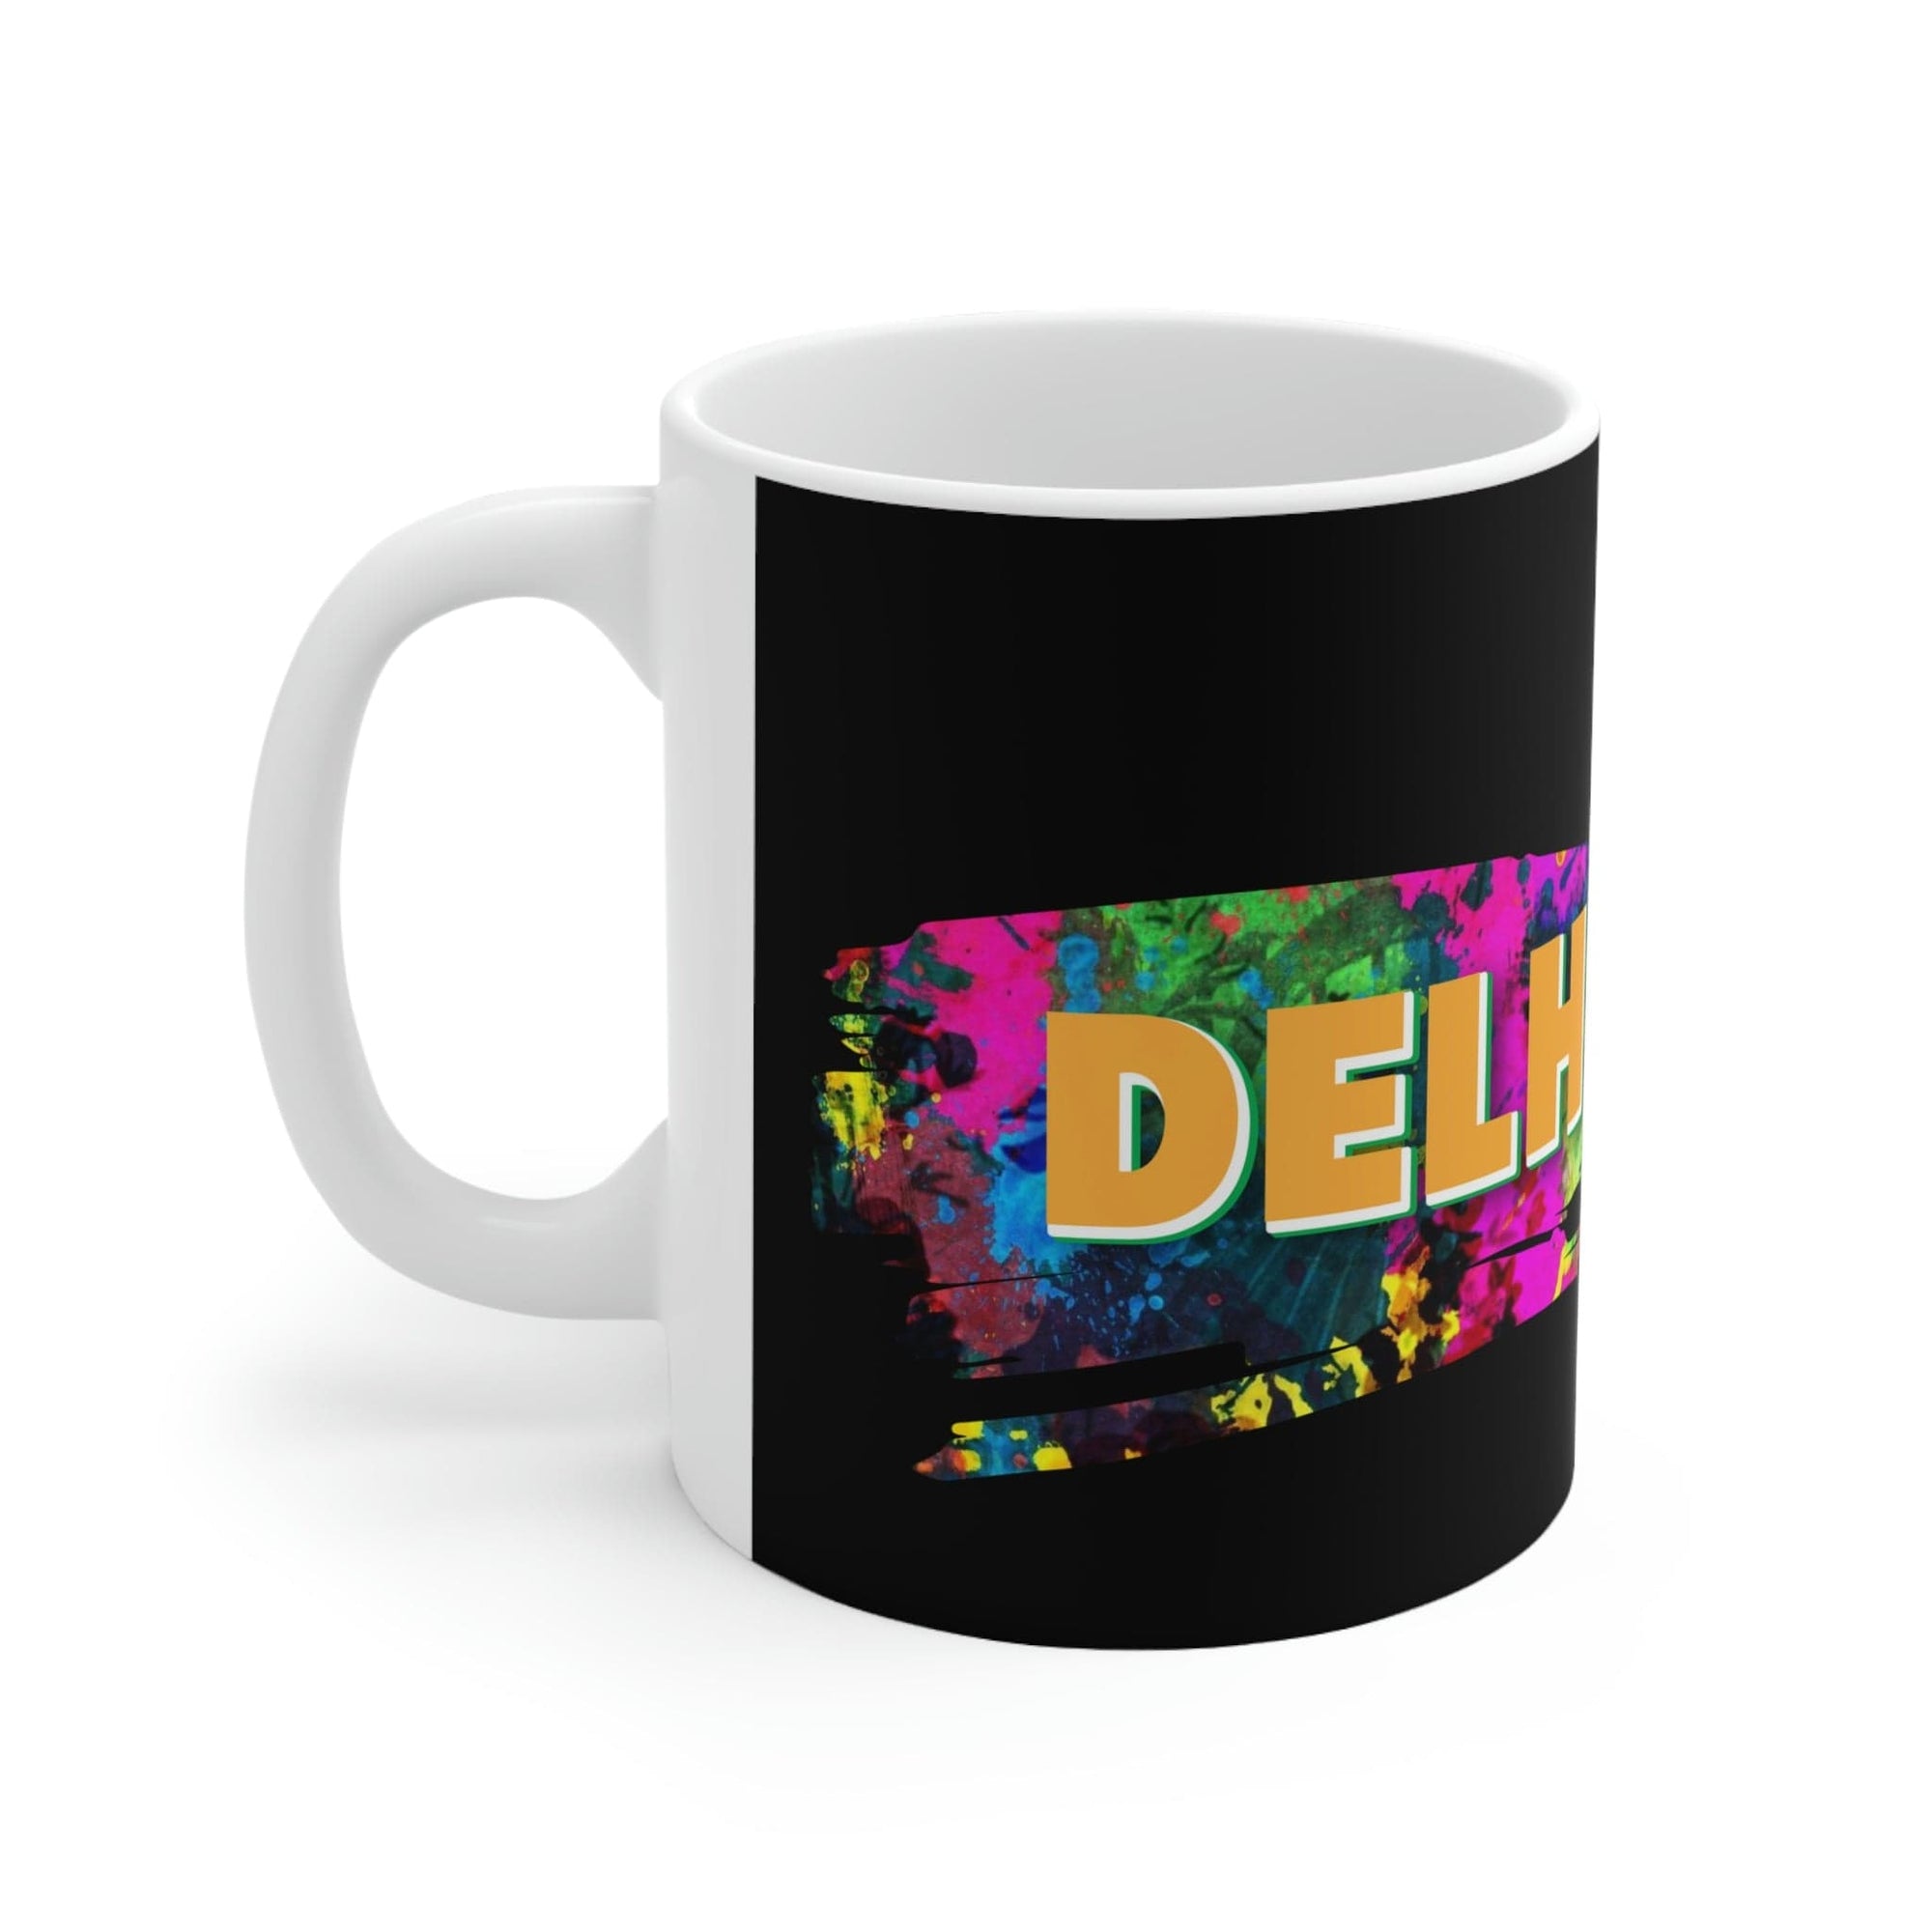 DELHI - Awesome Ceramic Mug, Exclusive Design